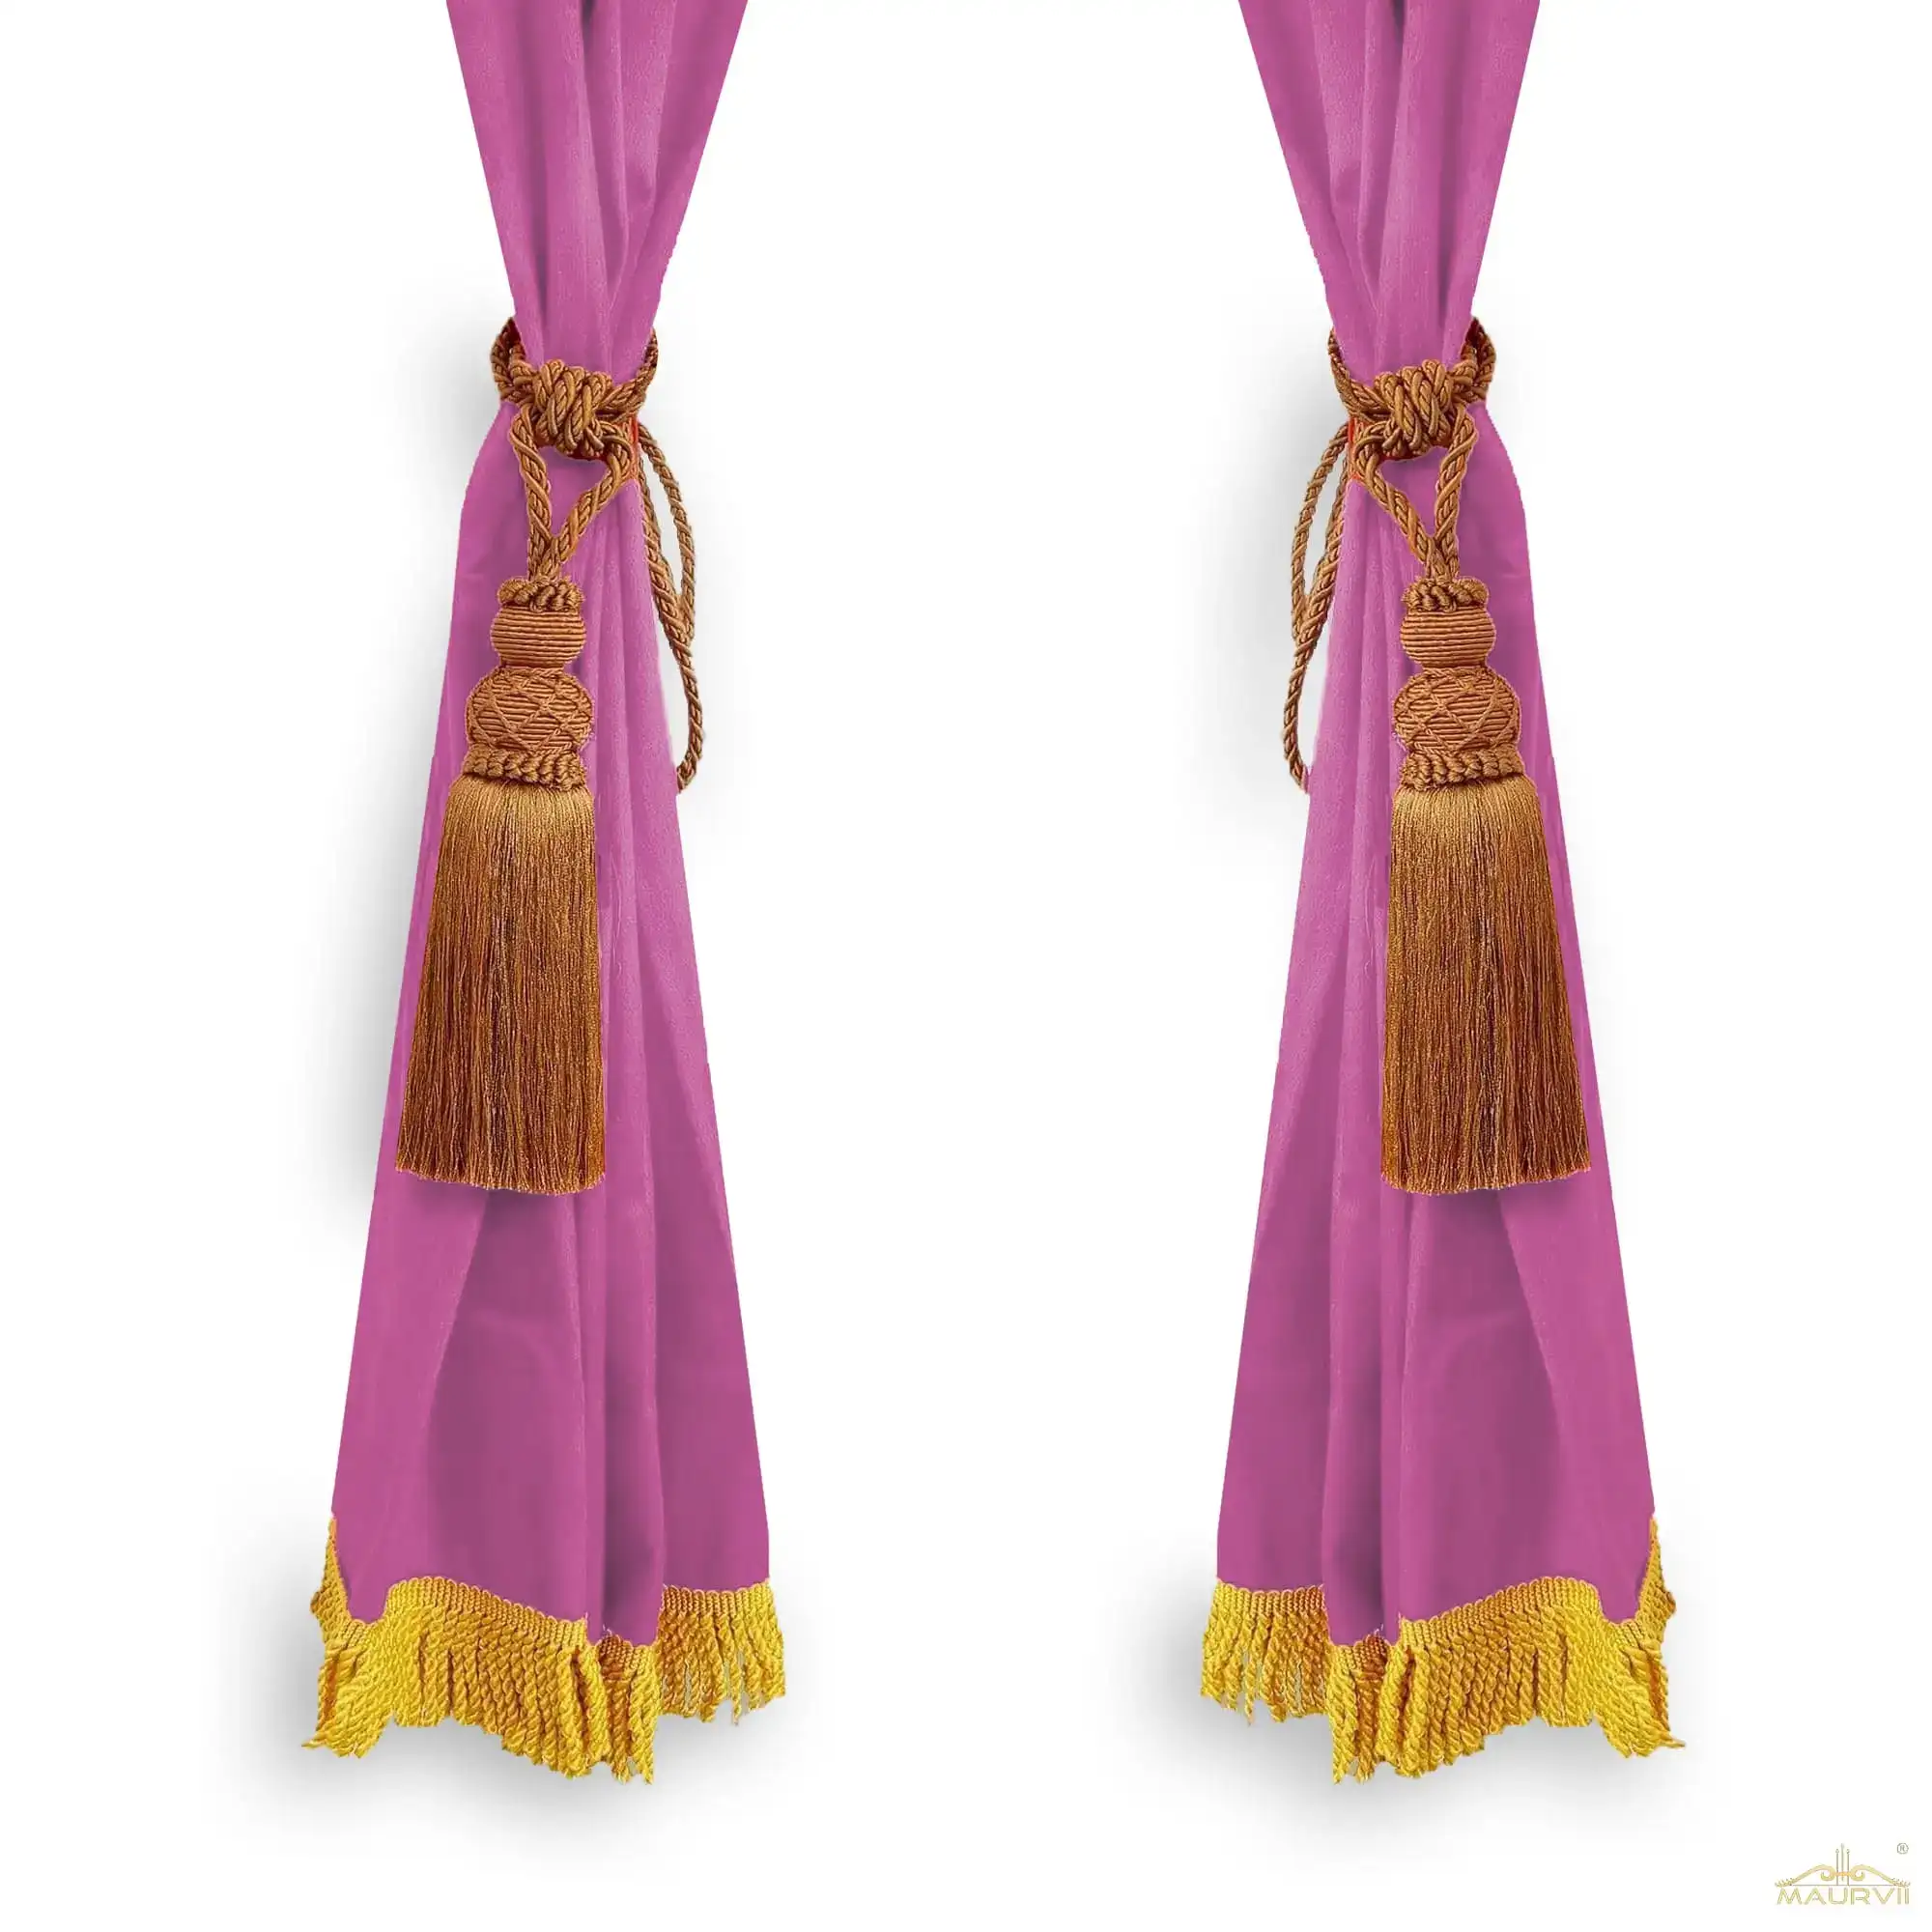 Decorative purple curtains